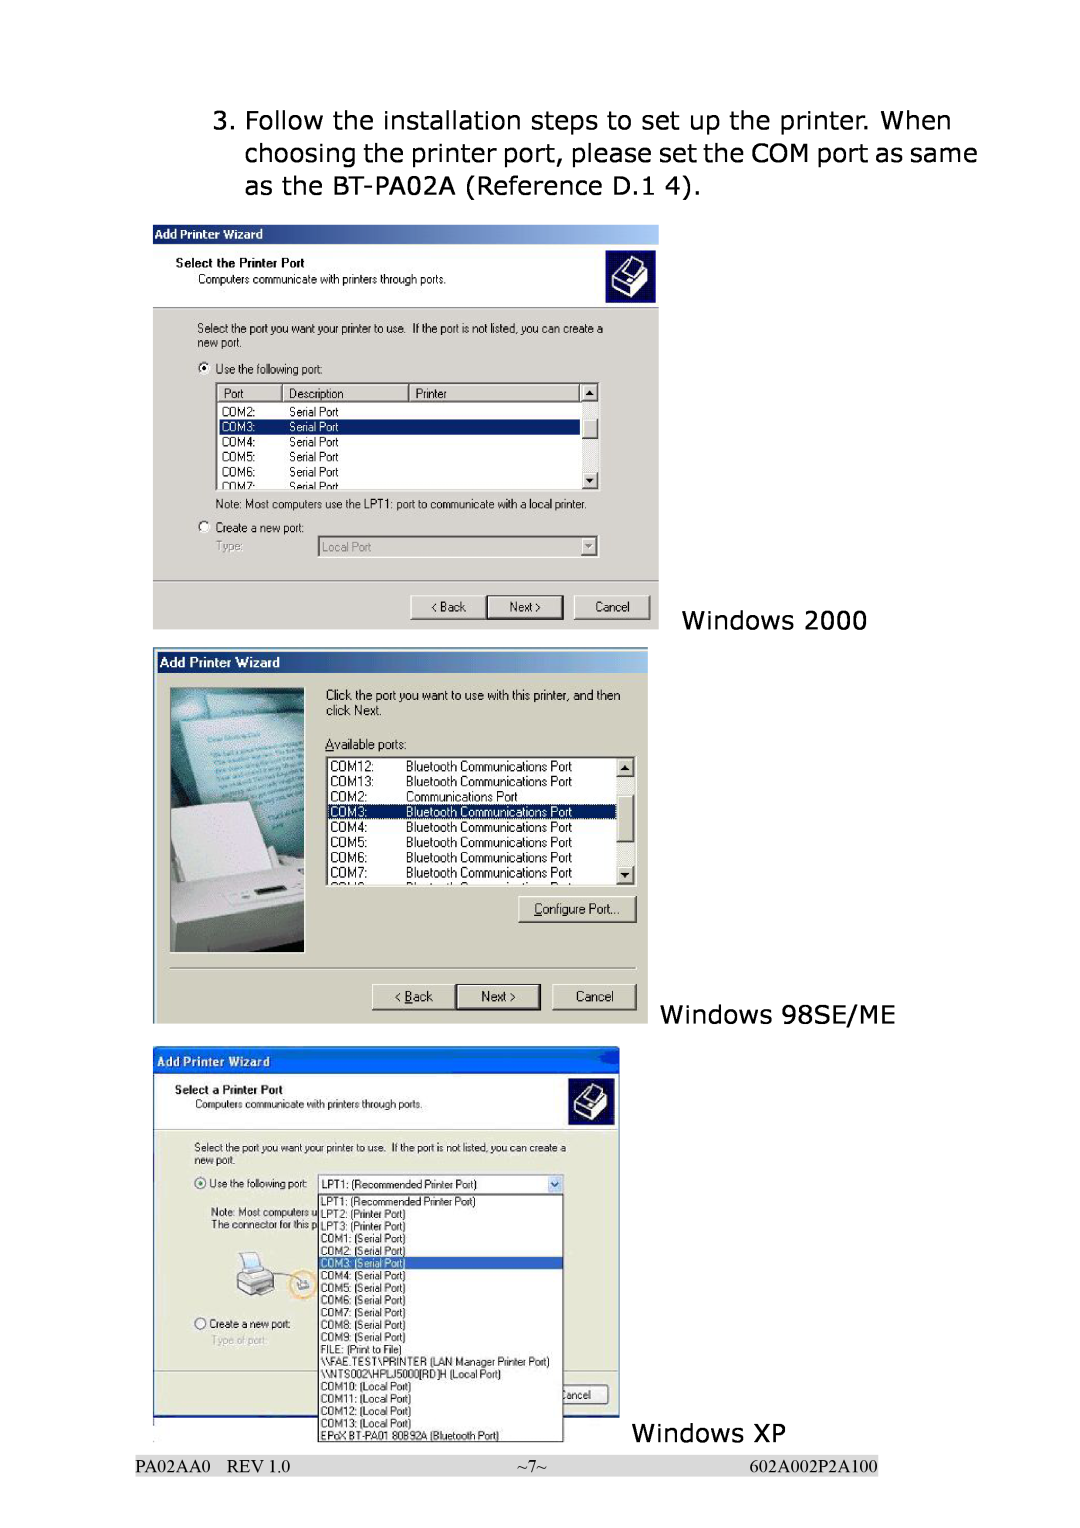 EPoX Computer BT-PA02A manual Windows Windows 98SE/ME Windows XP, PA02AA0 REV, 602A002P2A100 